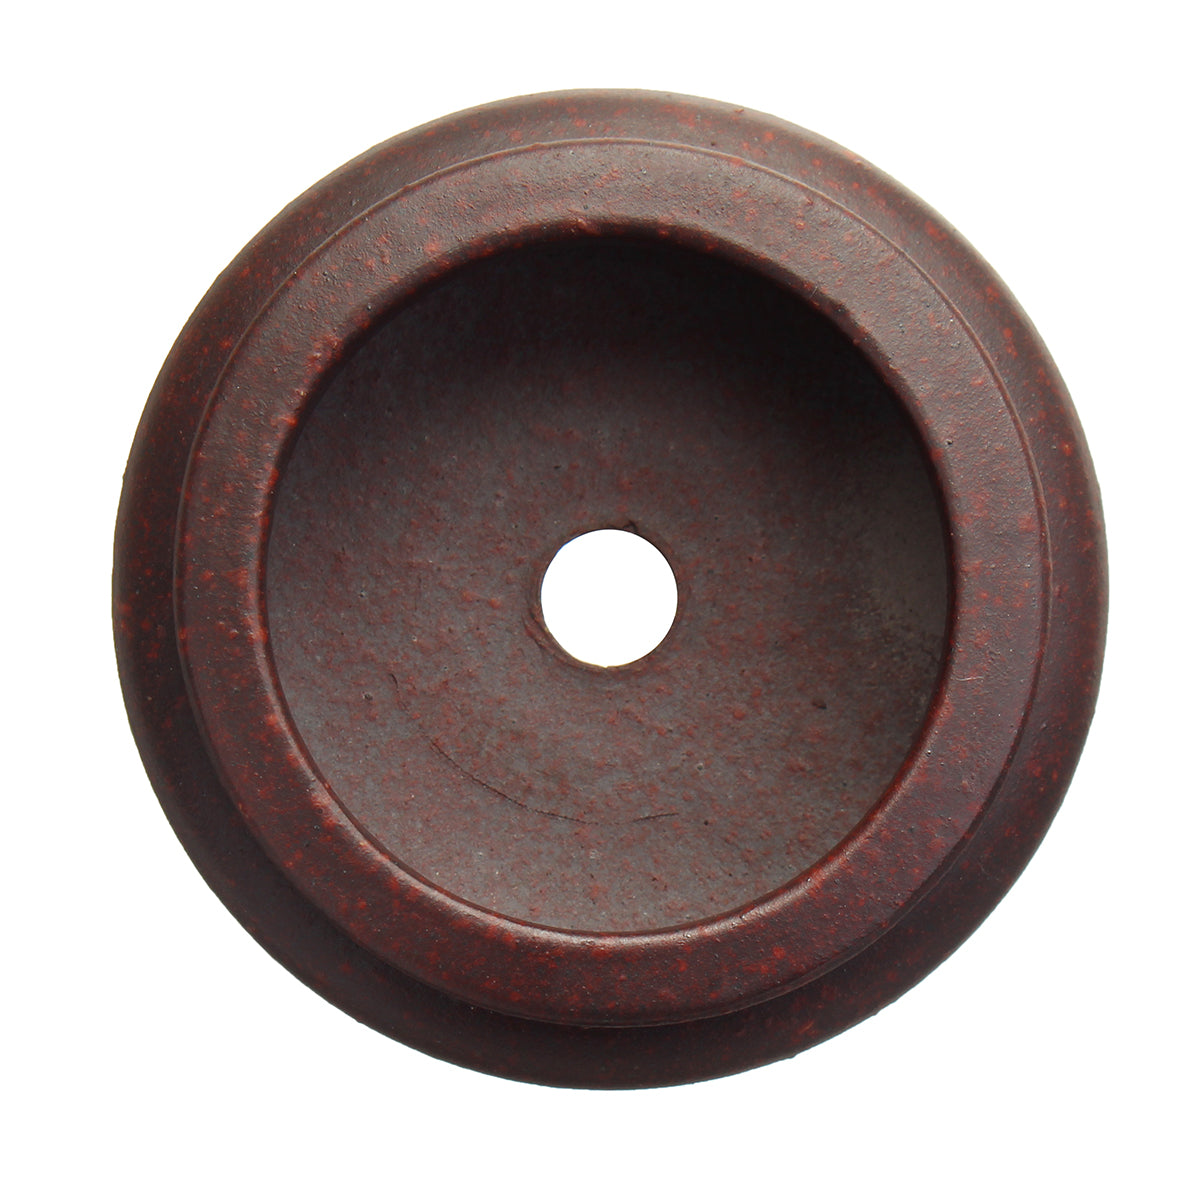 Ceramic Round Chinese Zisha Bonsai Pot 5.7x2.5cm - stilyo